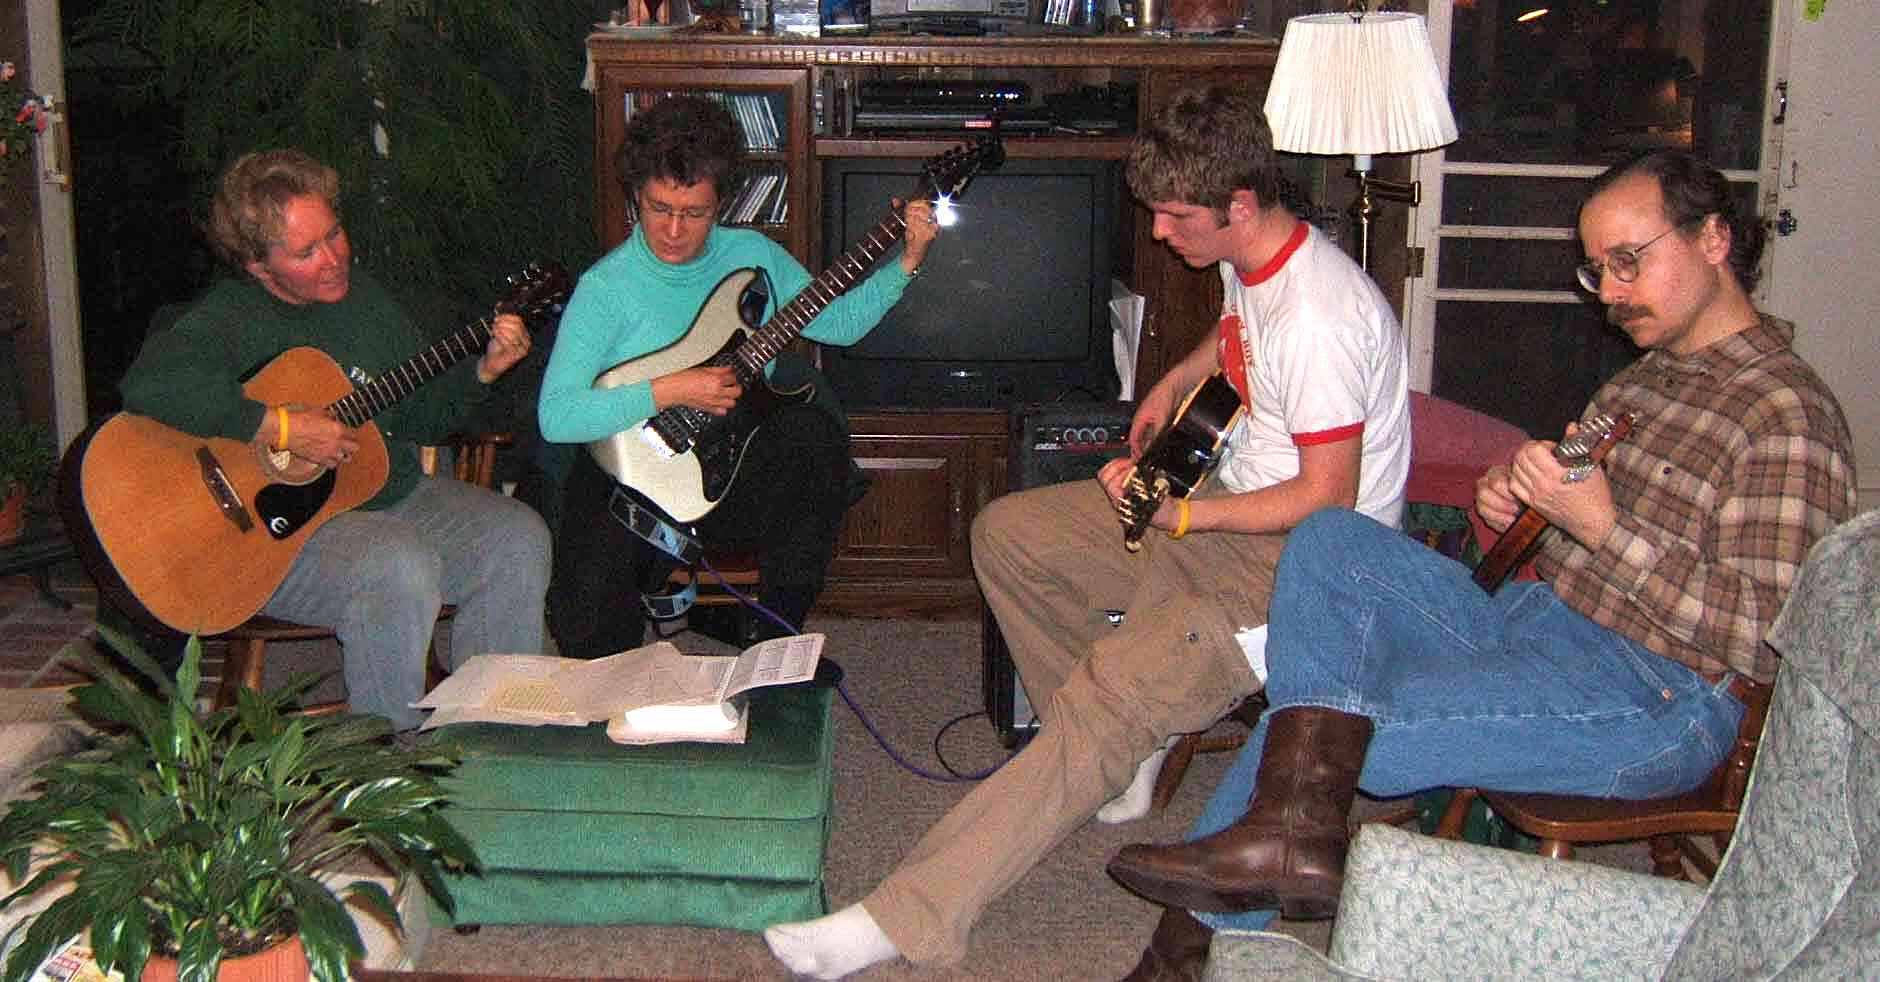 Jennifer Crossen playing music with Katie Crossen (sister), David Crossen (son), and Lenny Dentinsass in Lexington, KY, 2003.